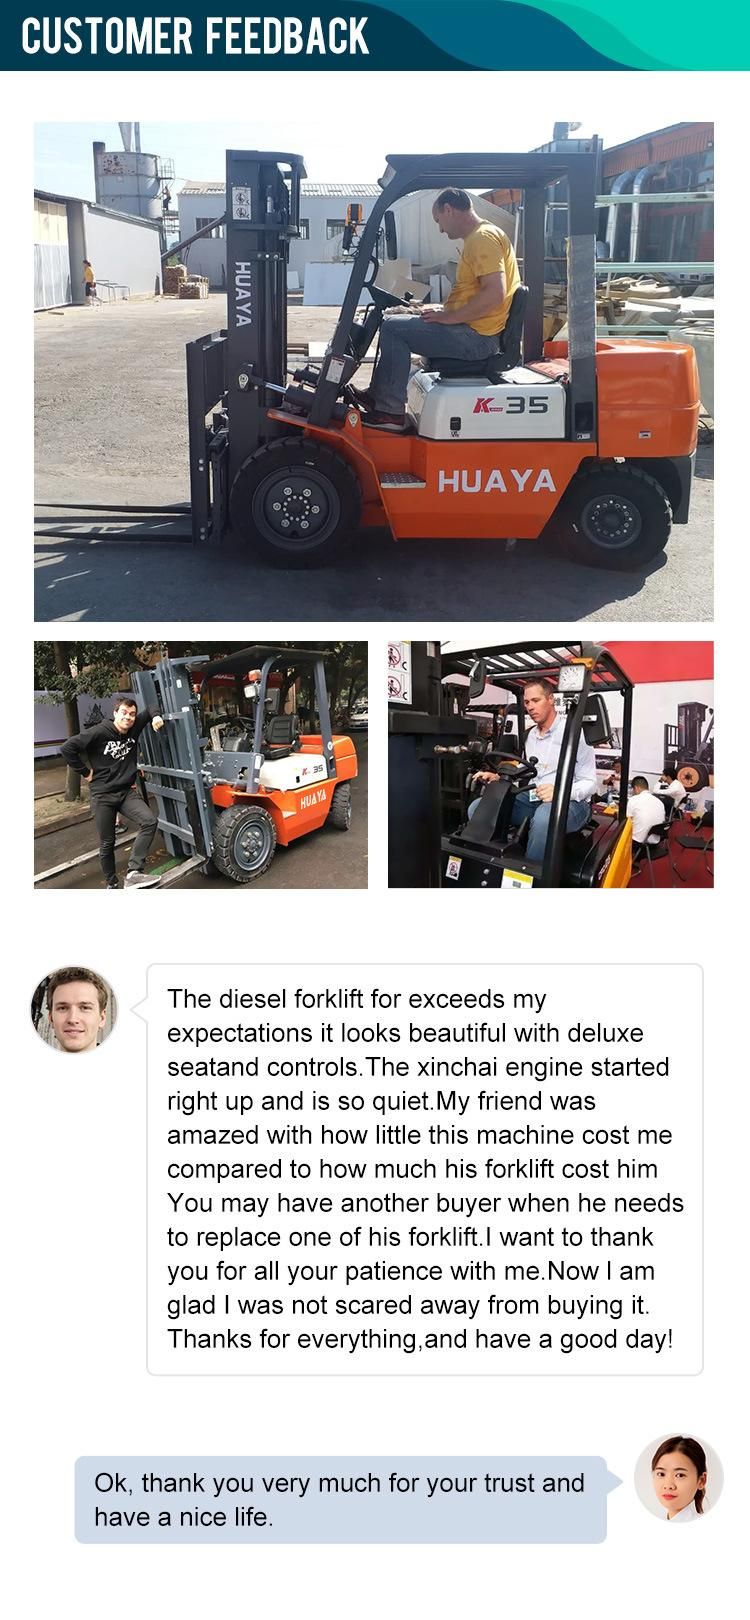 Cheap Price 3000-7000mm Diesel Huaya China Trucks Mini Hot Sale Forklift